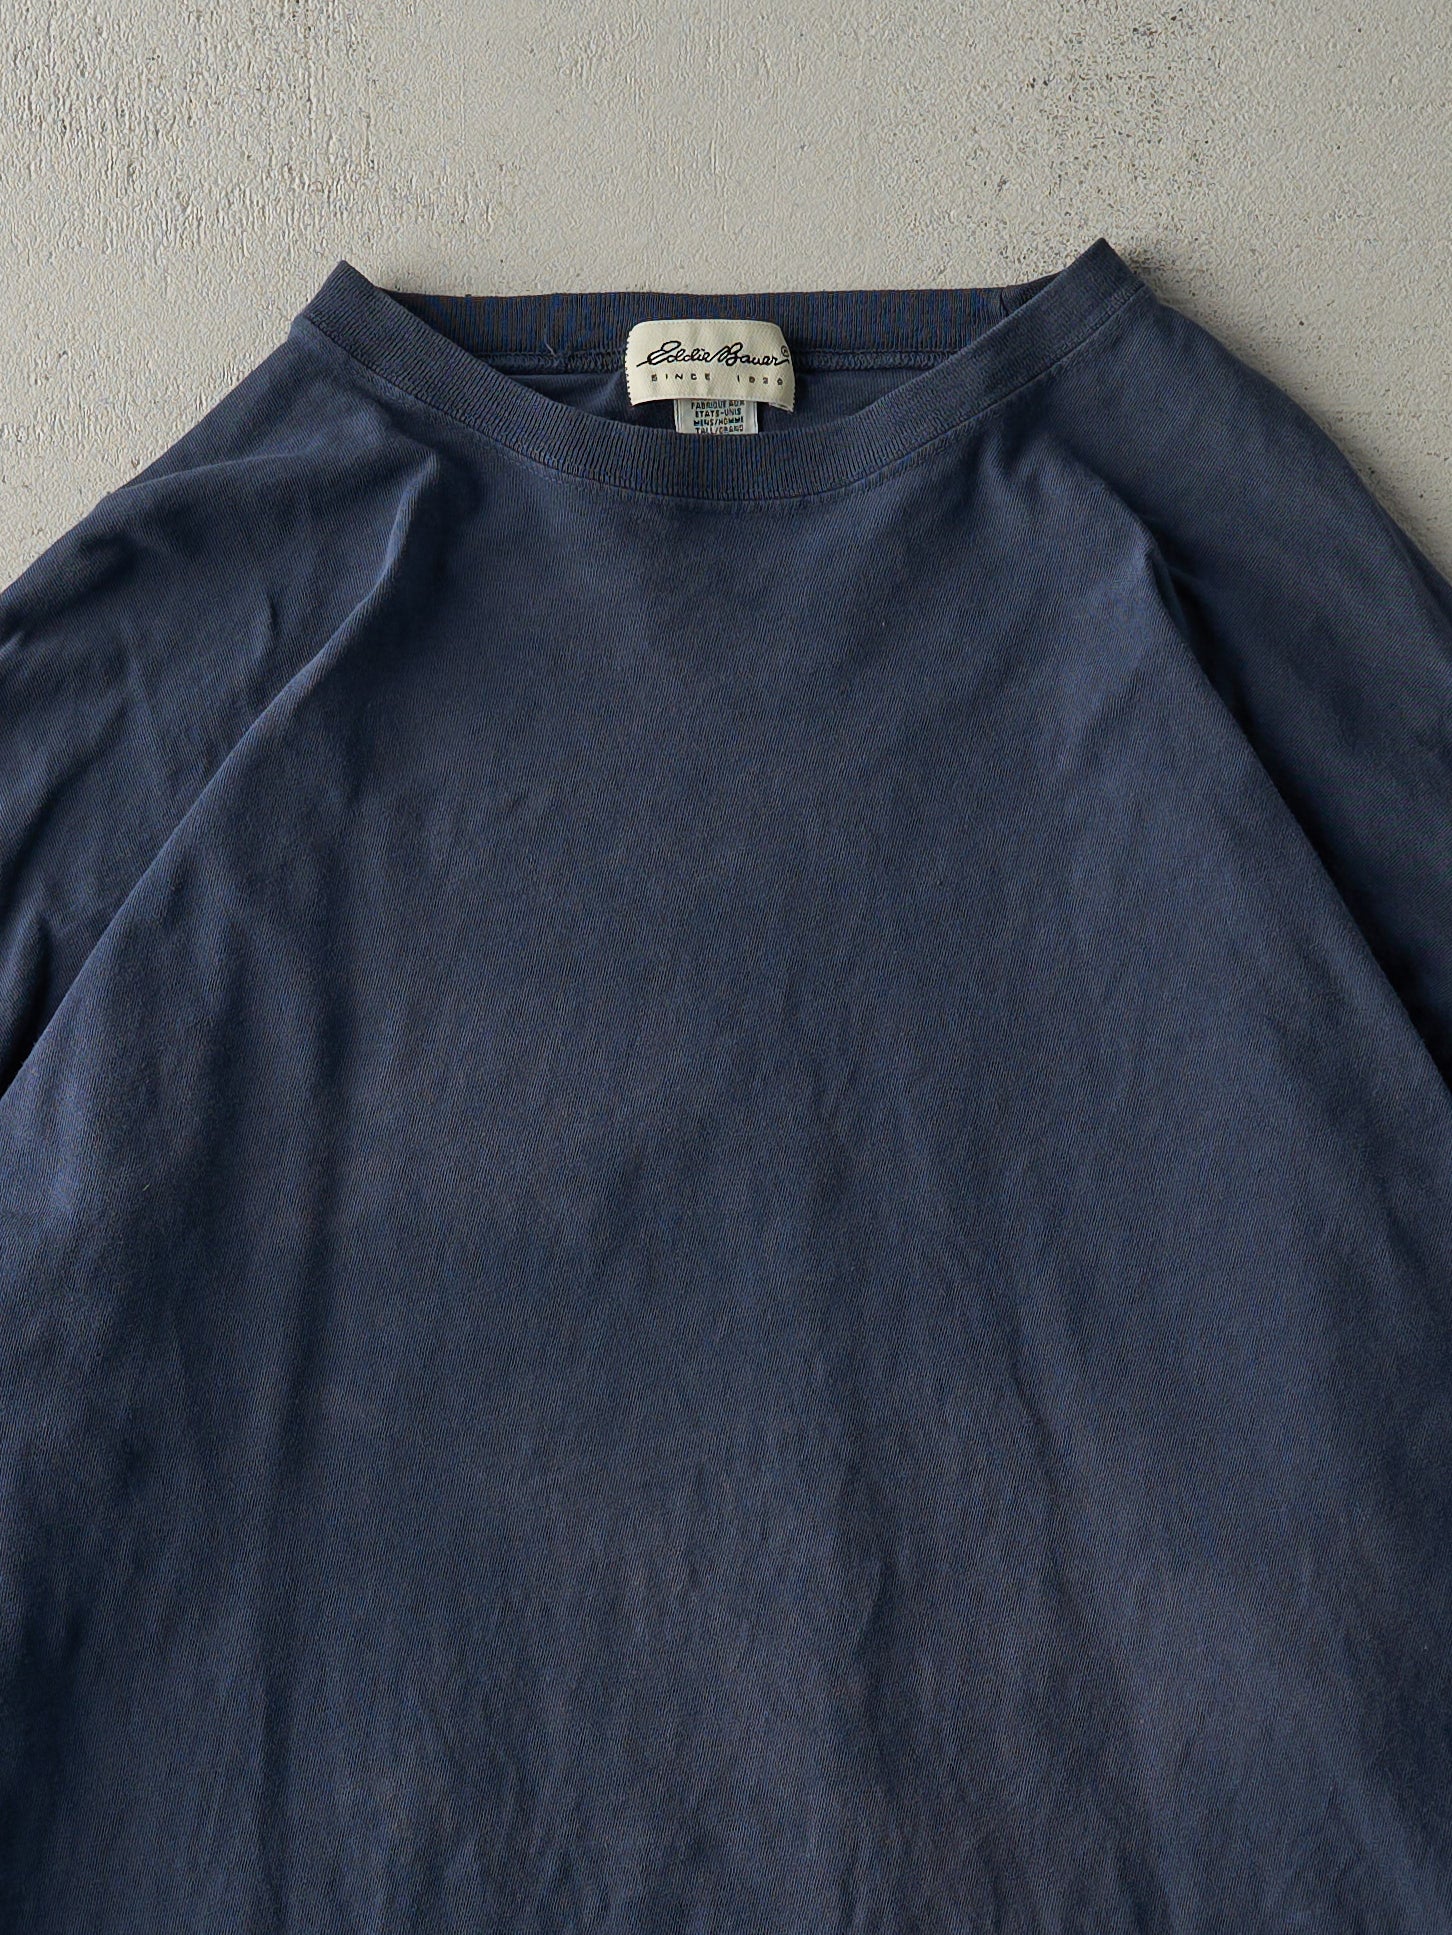 Vintage 90s Navy Blue Eddie Bauer Blank Long Sleeve (XL)